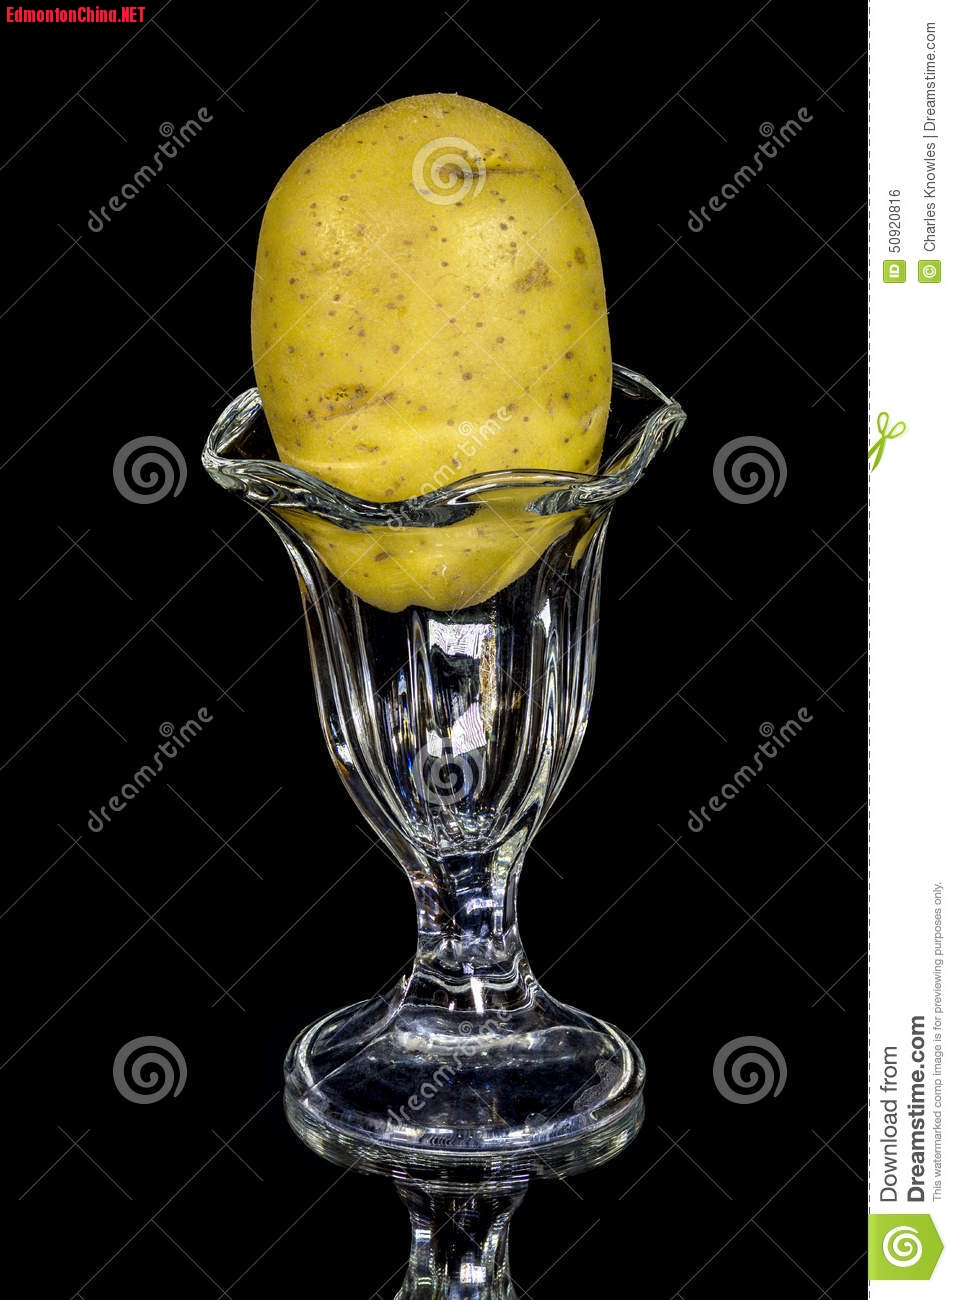 vase-holds-yellow-potato-mr-fancy-glass-50920816.jpg